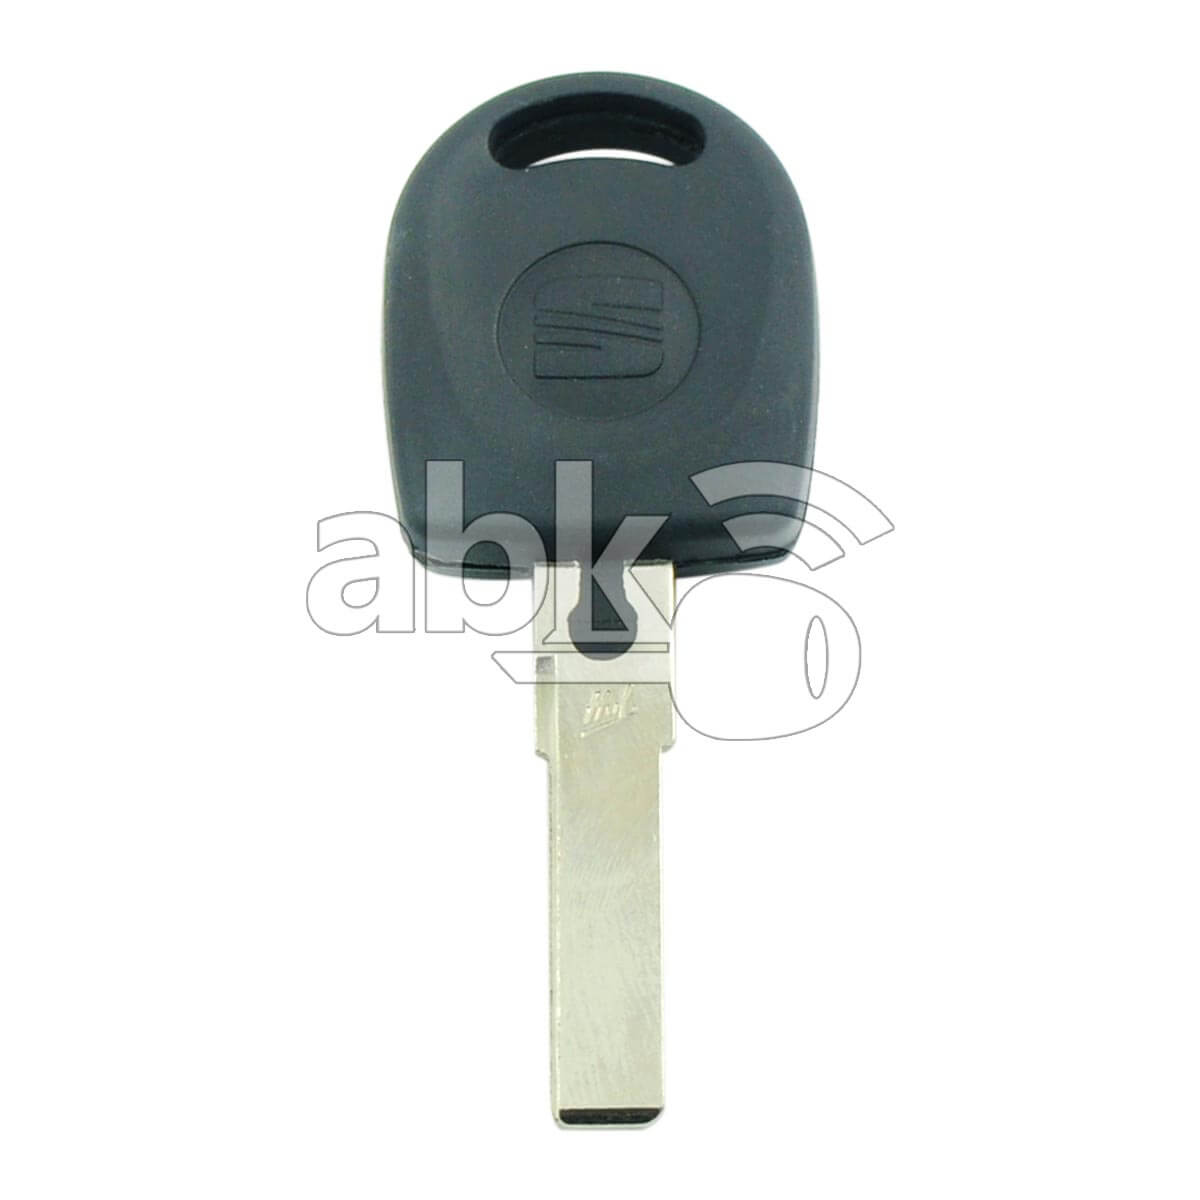 Seat Chip Less Key HU66 - ABK-1322 - ABKEYS.COM